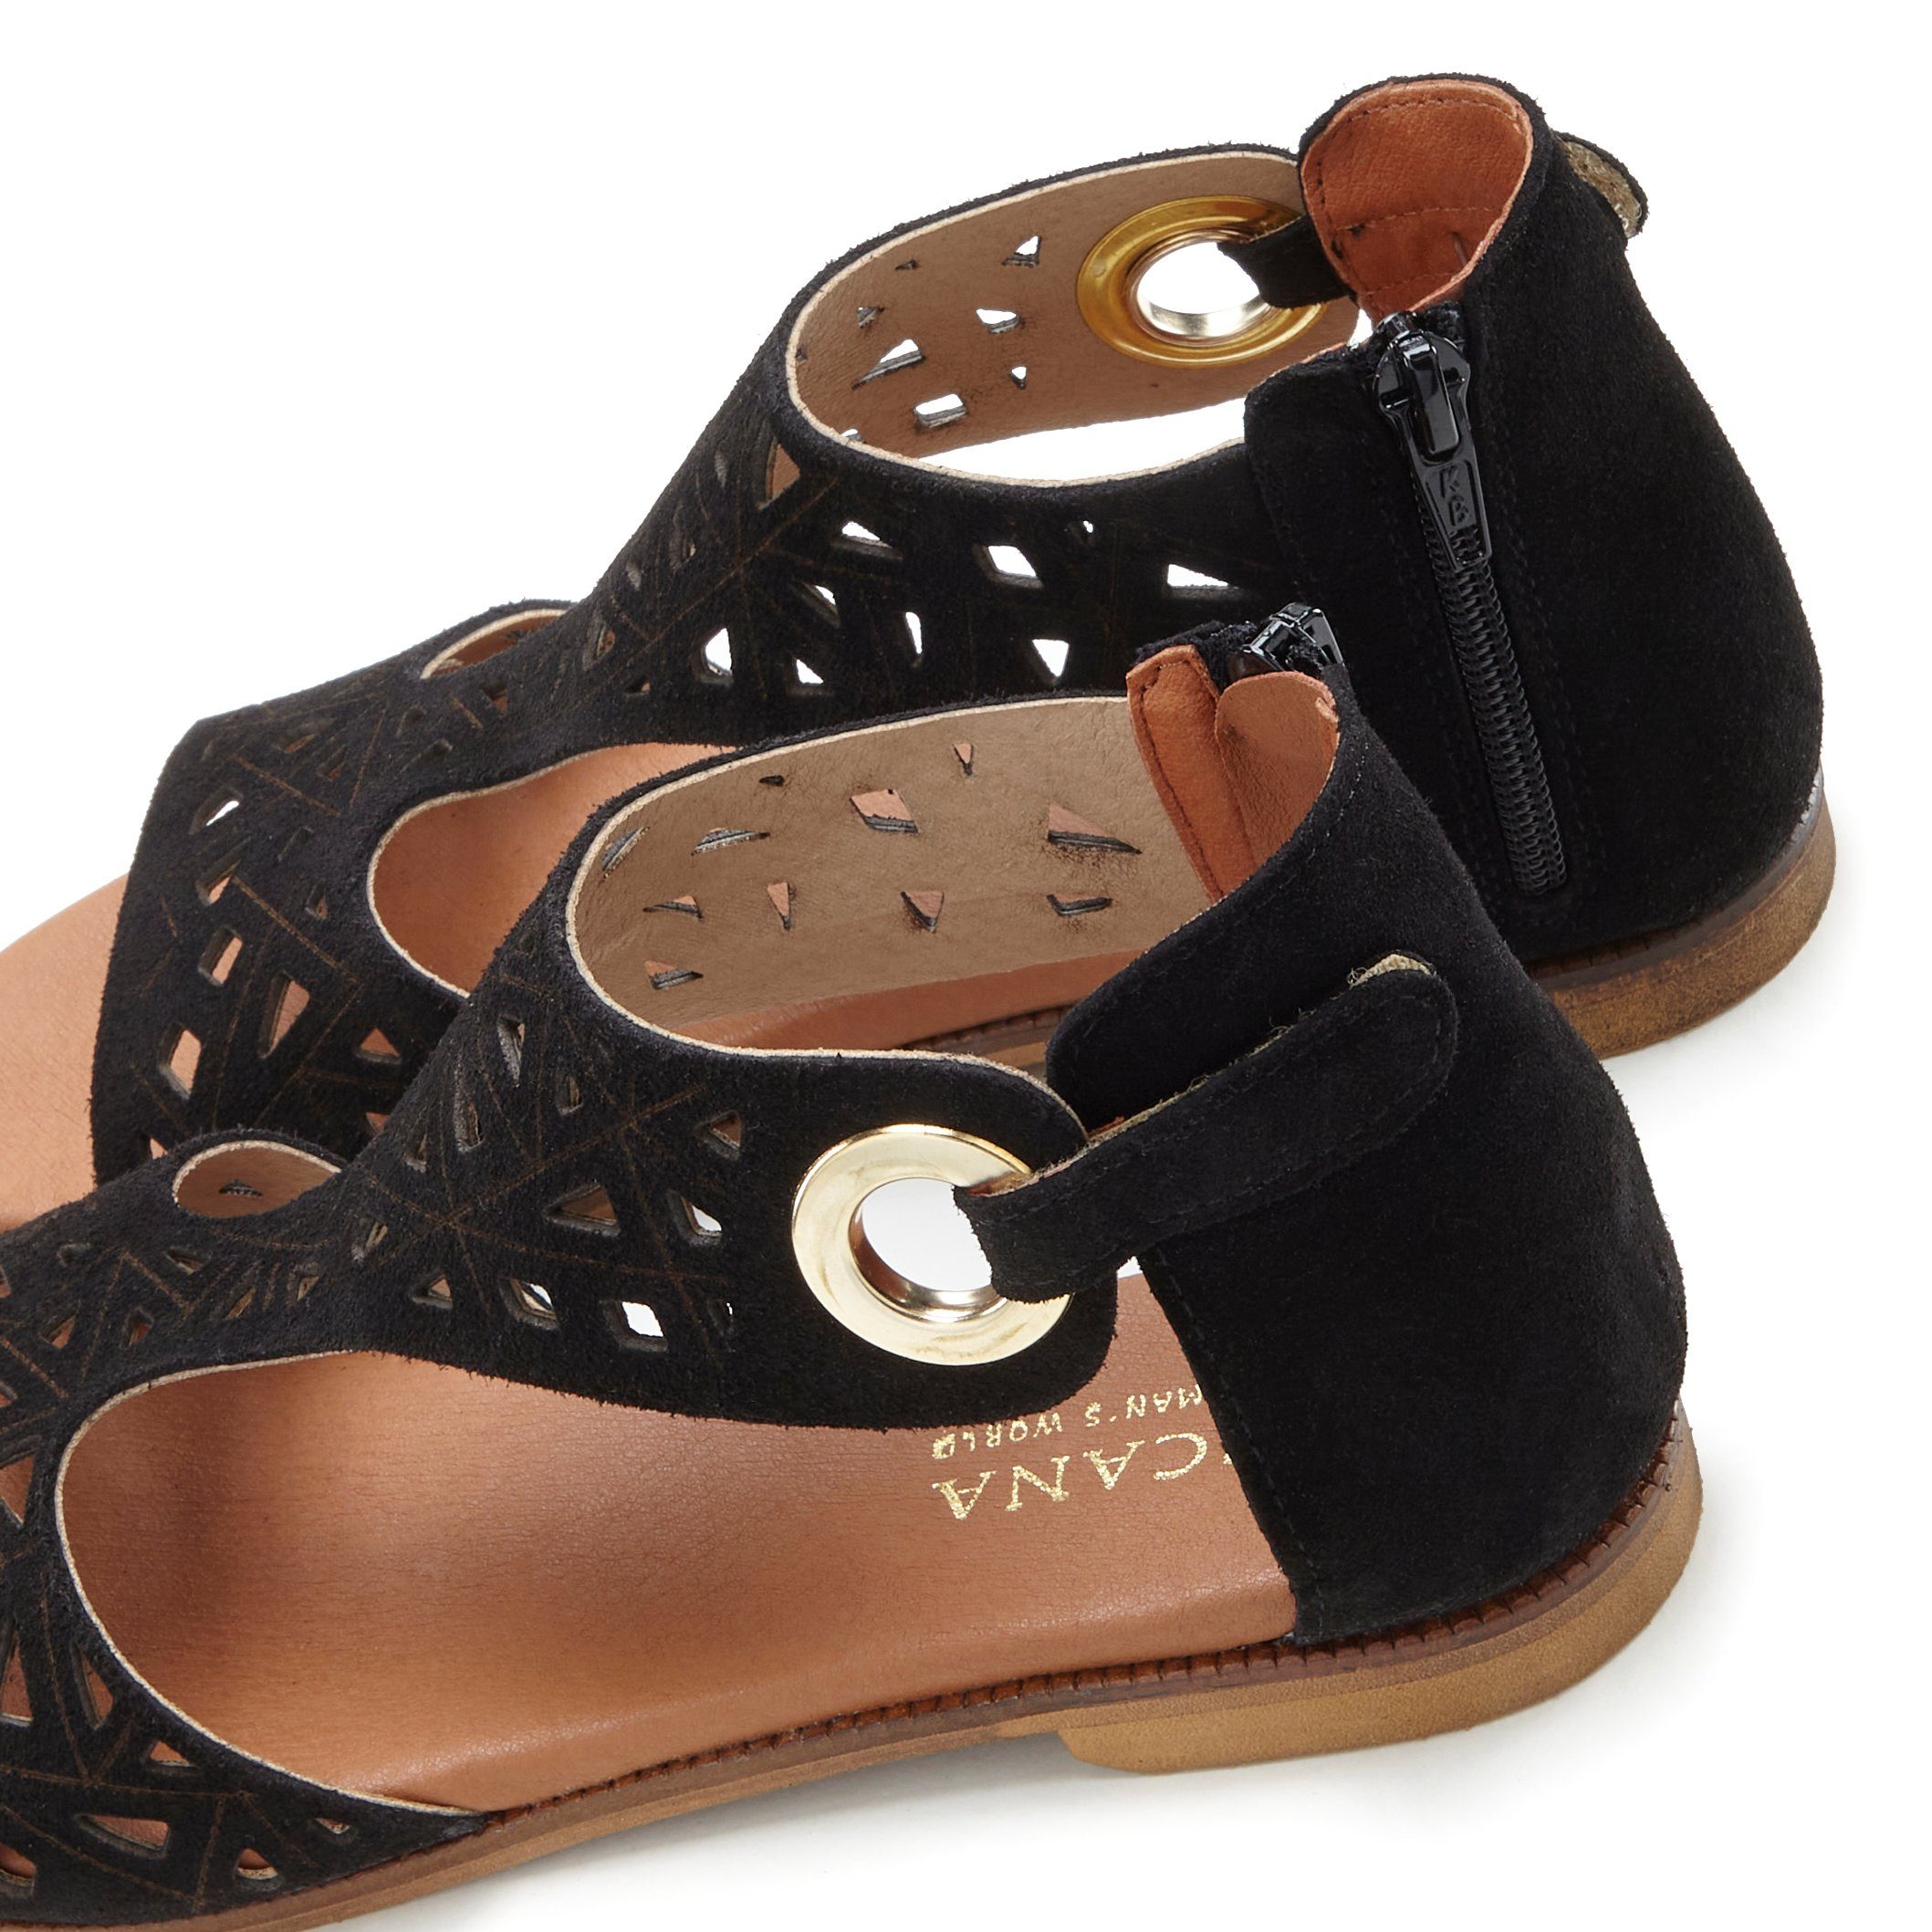 LASCANA Sandale Sandalette, Sommerschuh aus hochwertigem Cut-Outs Leder schwarz mit